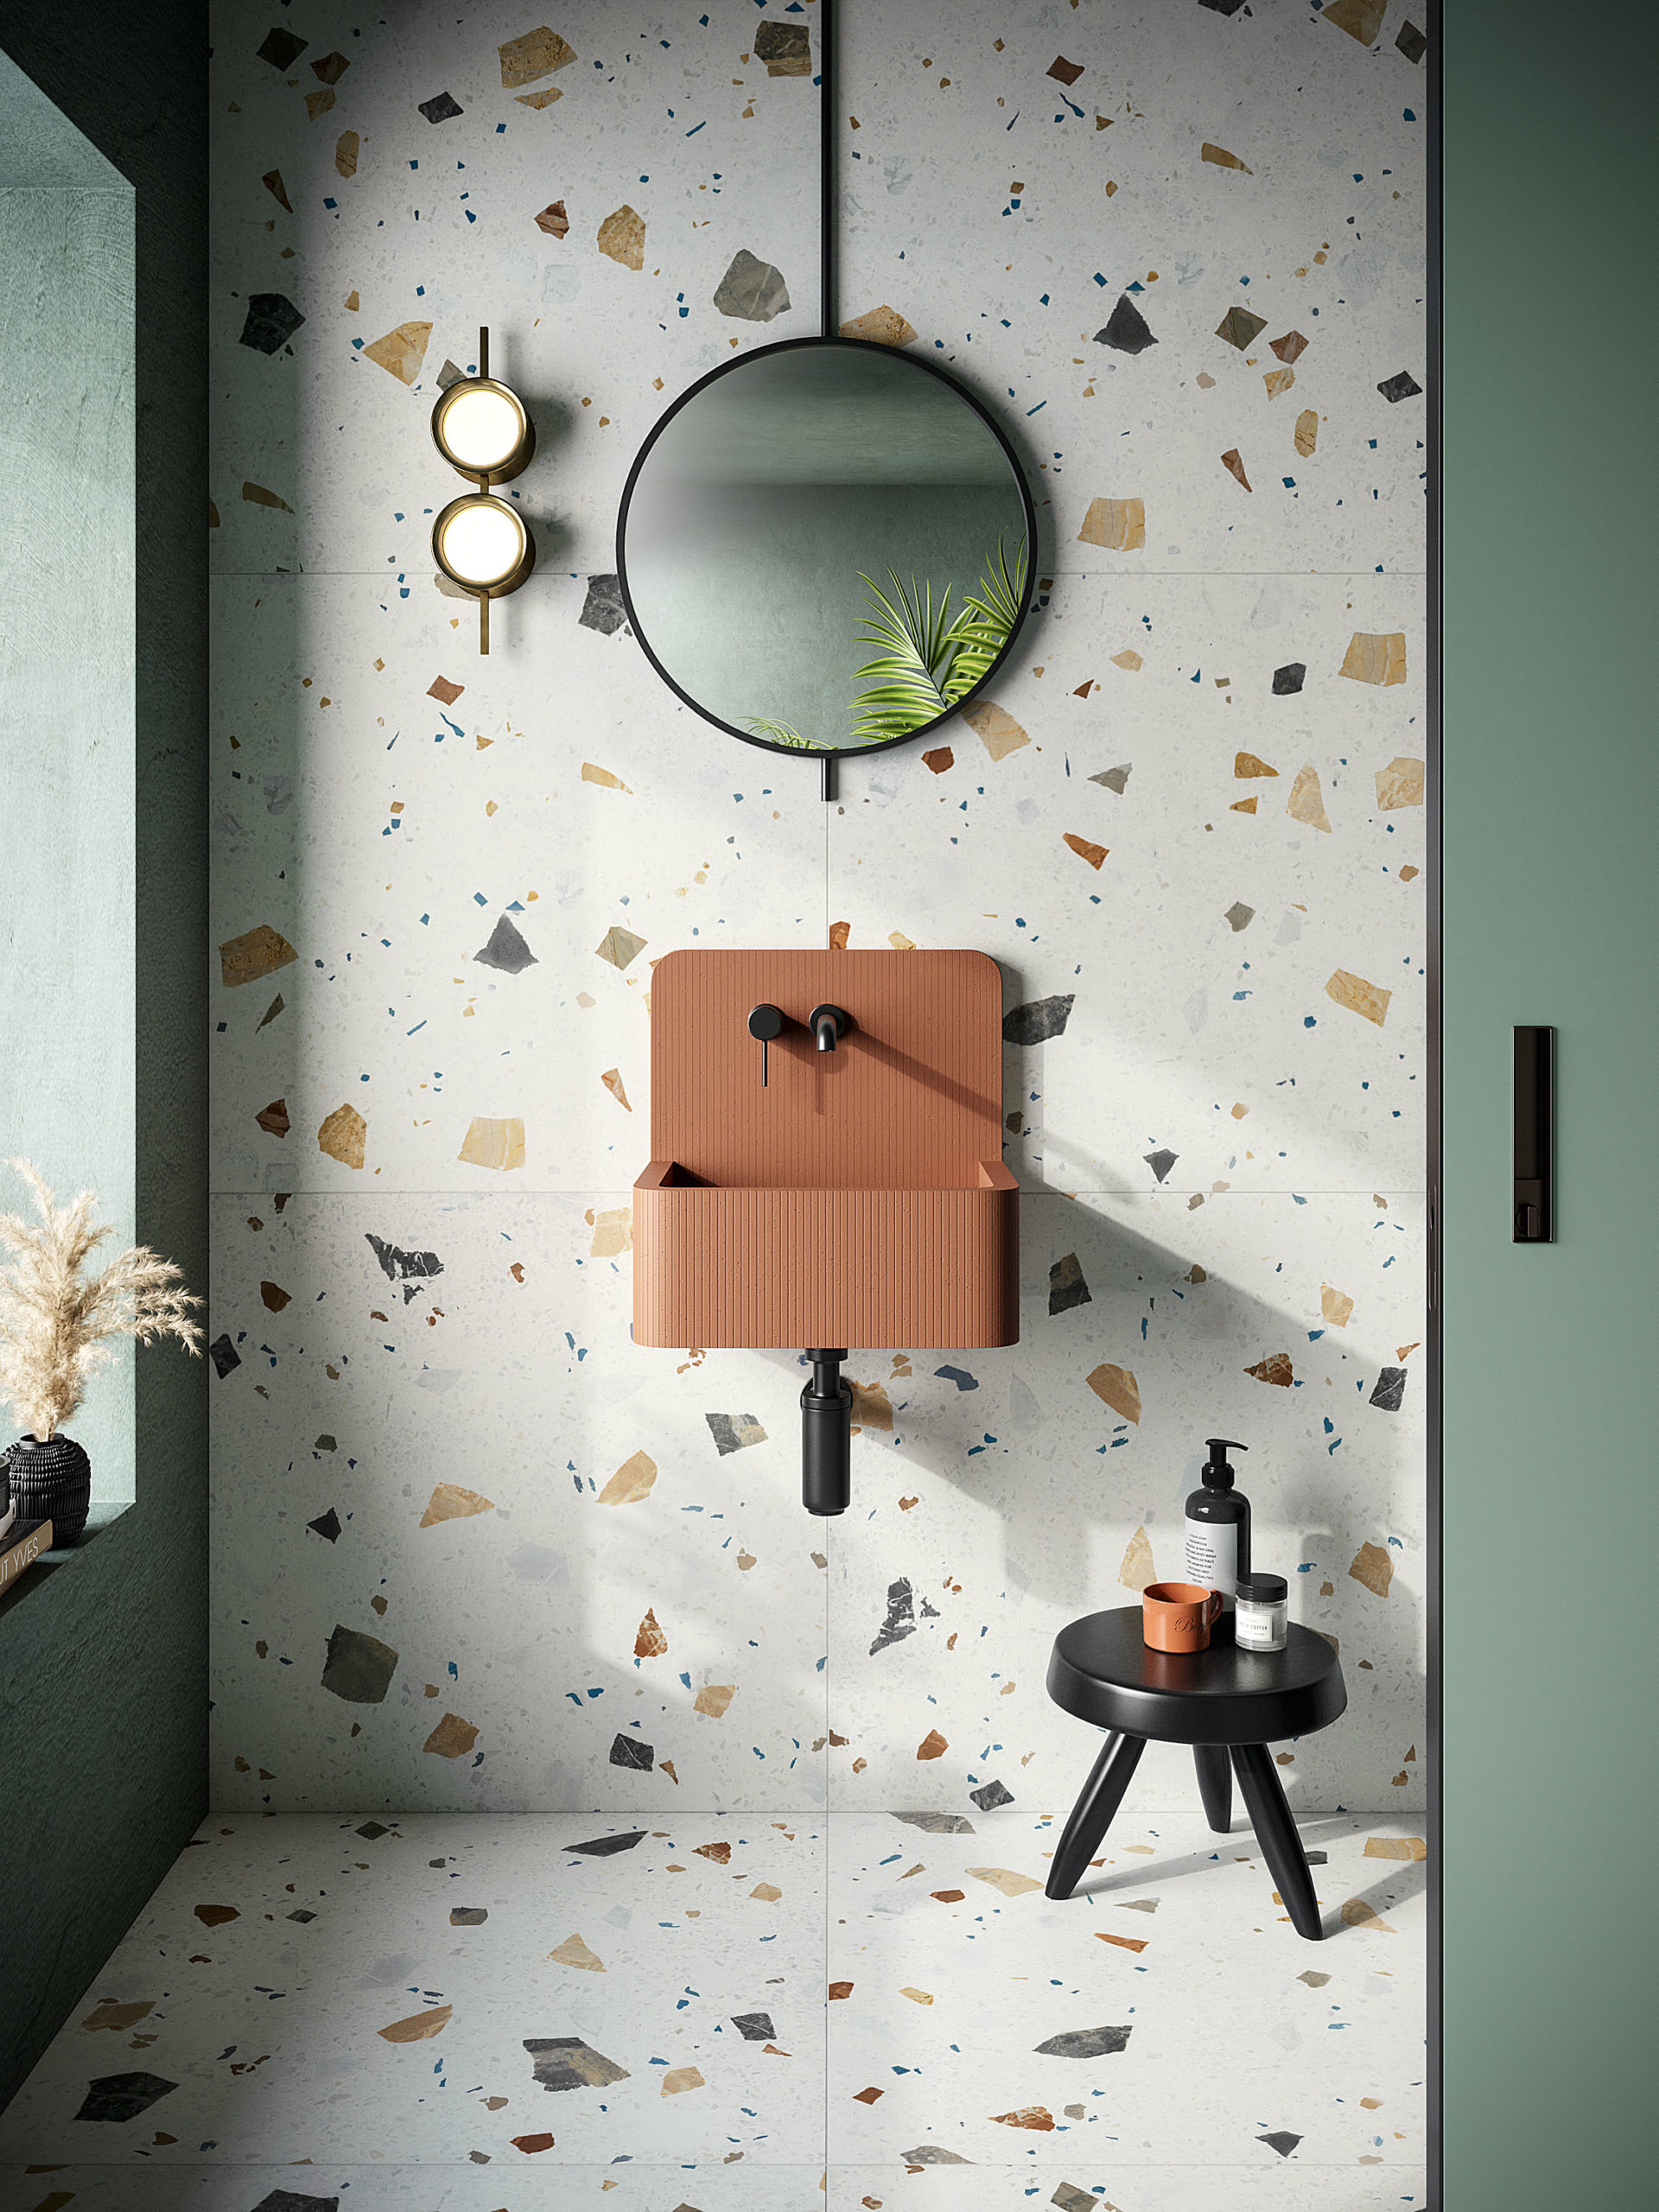 Tile Trends 2021 From Art Deco To New, Bathroom Floor Tiles Ideas 2021